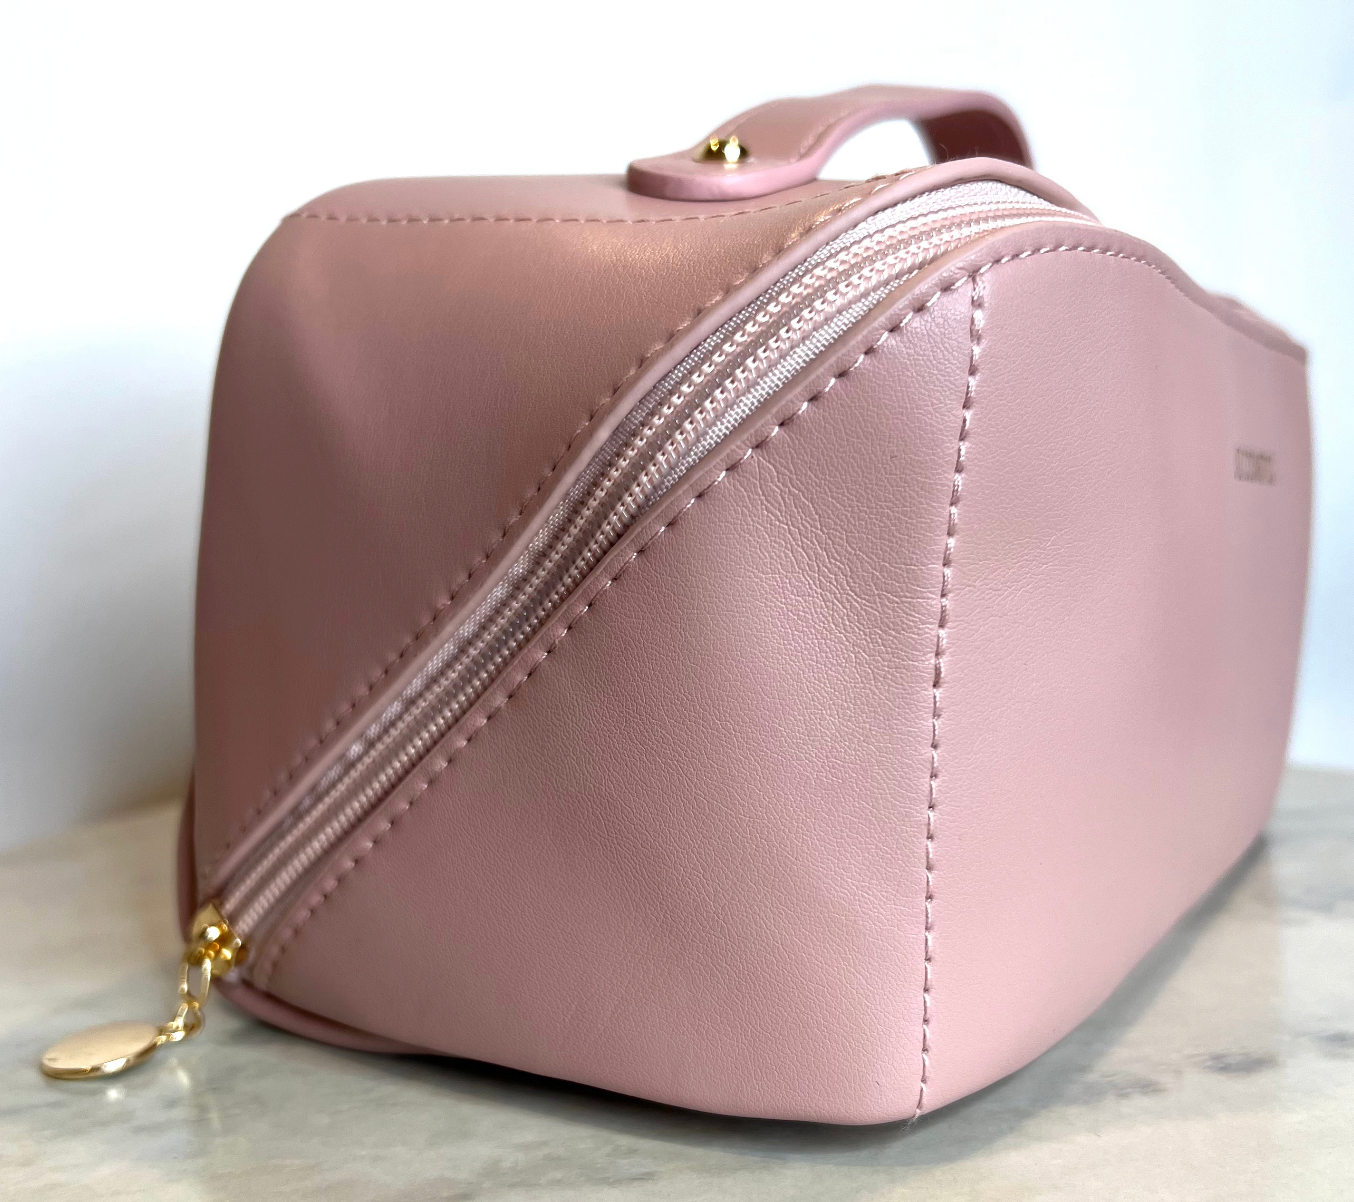 JAZ Cosmetics Bag in Pink